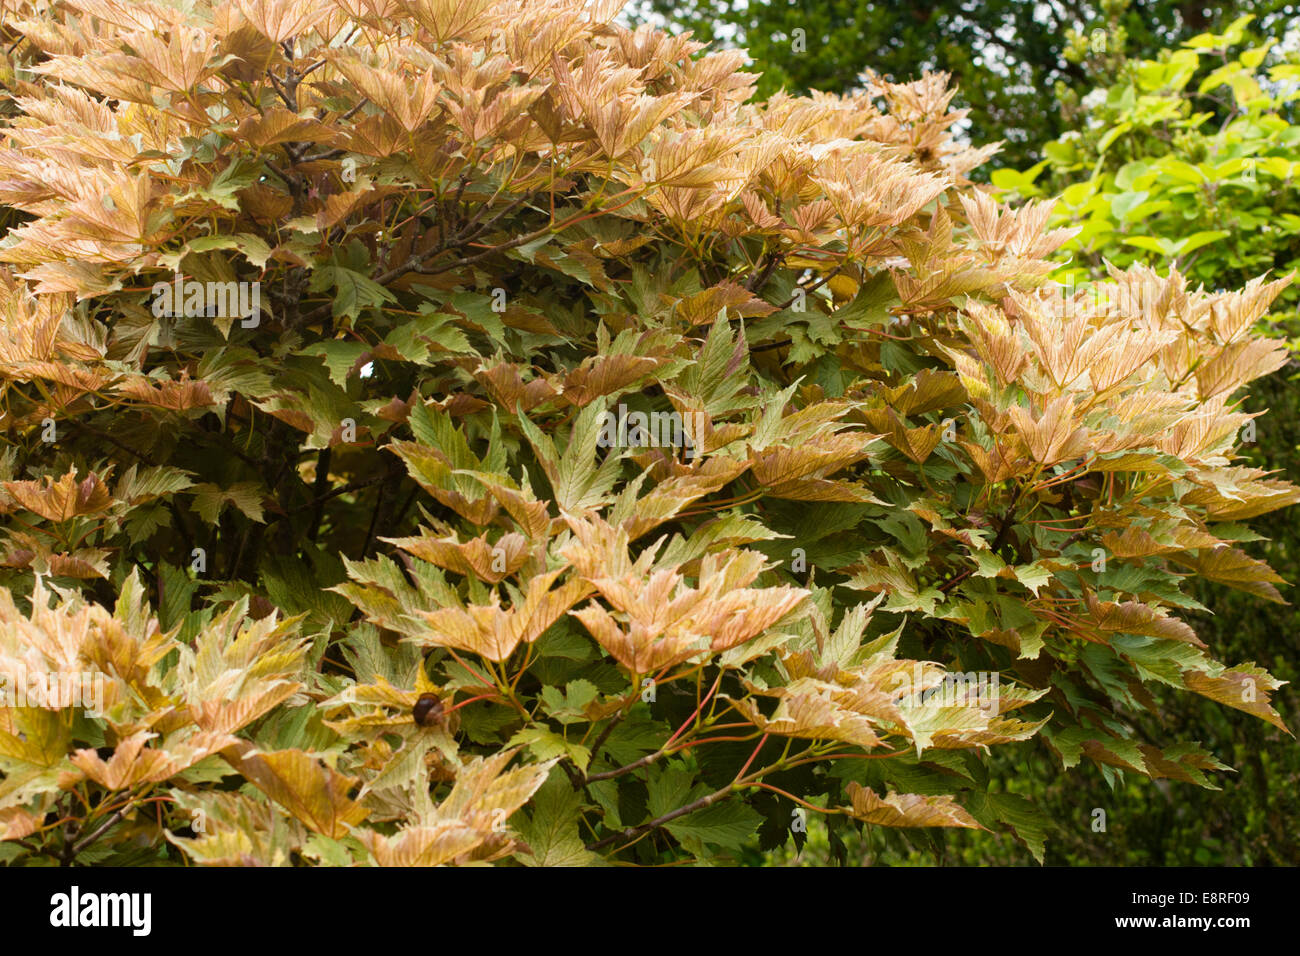 Bronzed and mottled foliage of the deciduous tree, Acer pseudoplatanus 'Prinz Handjery' Stock Photo